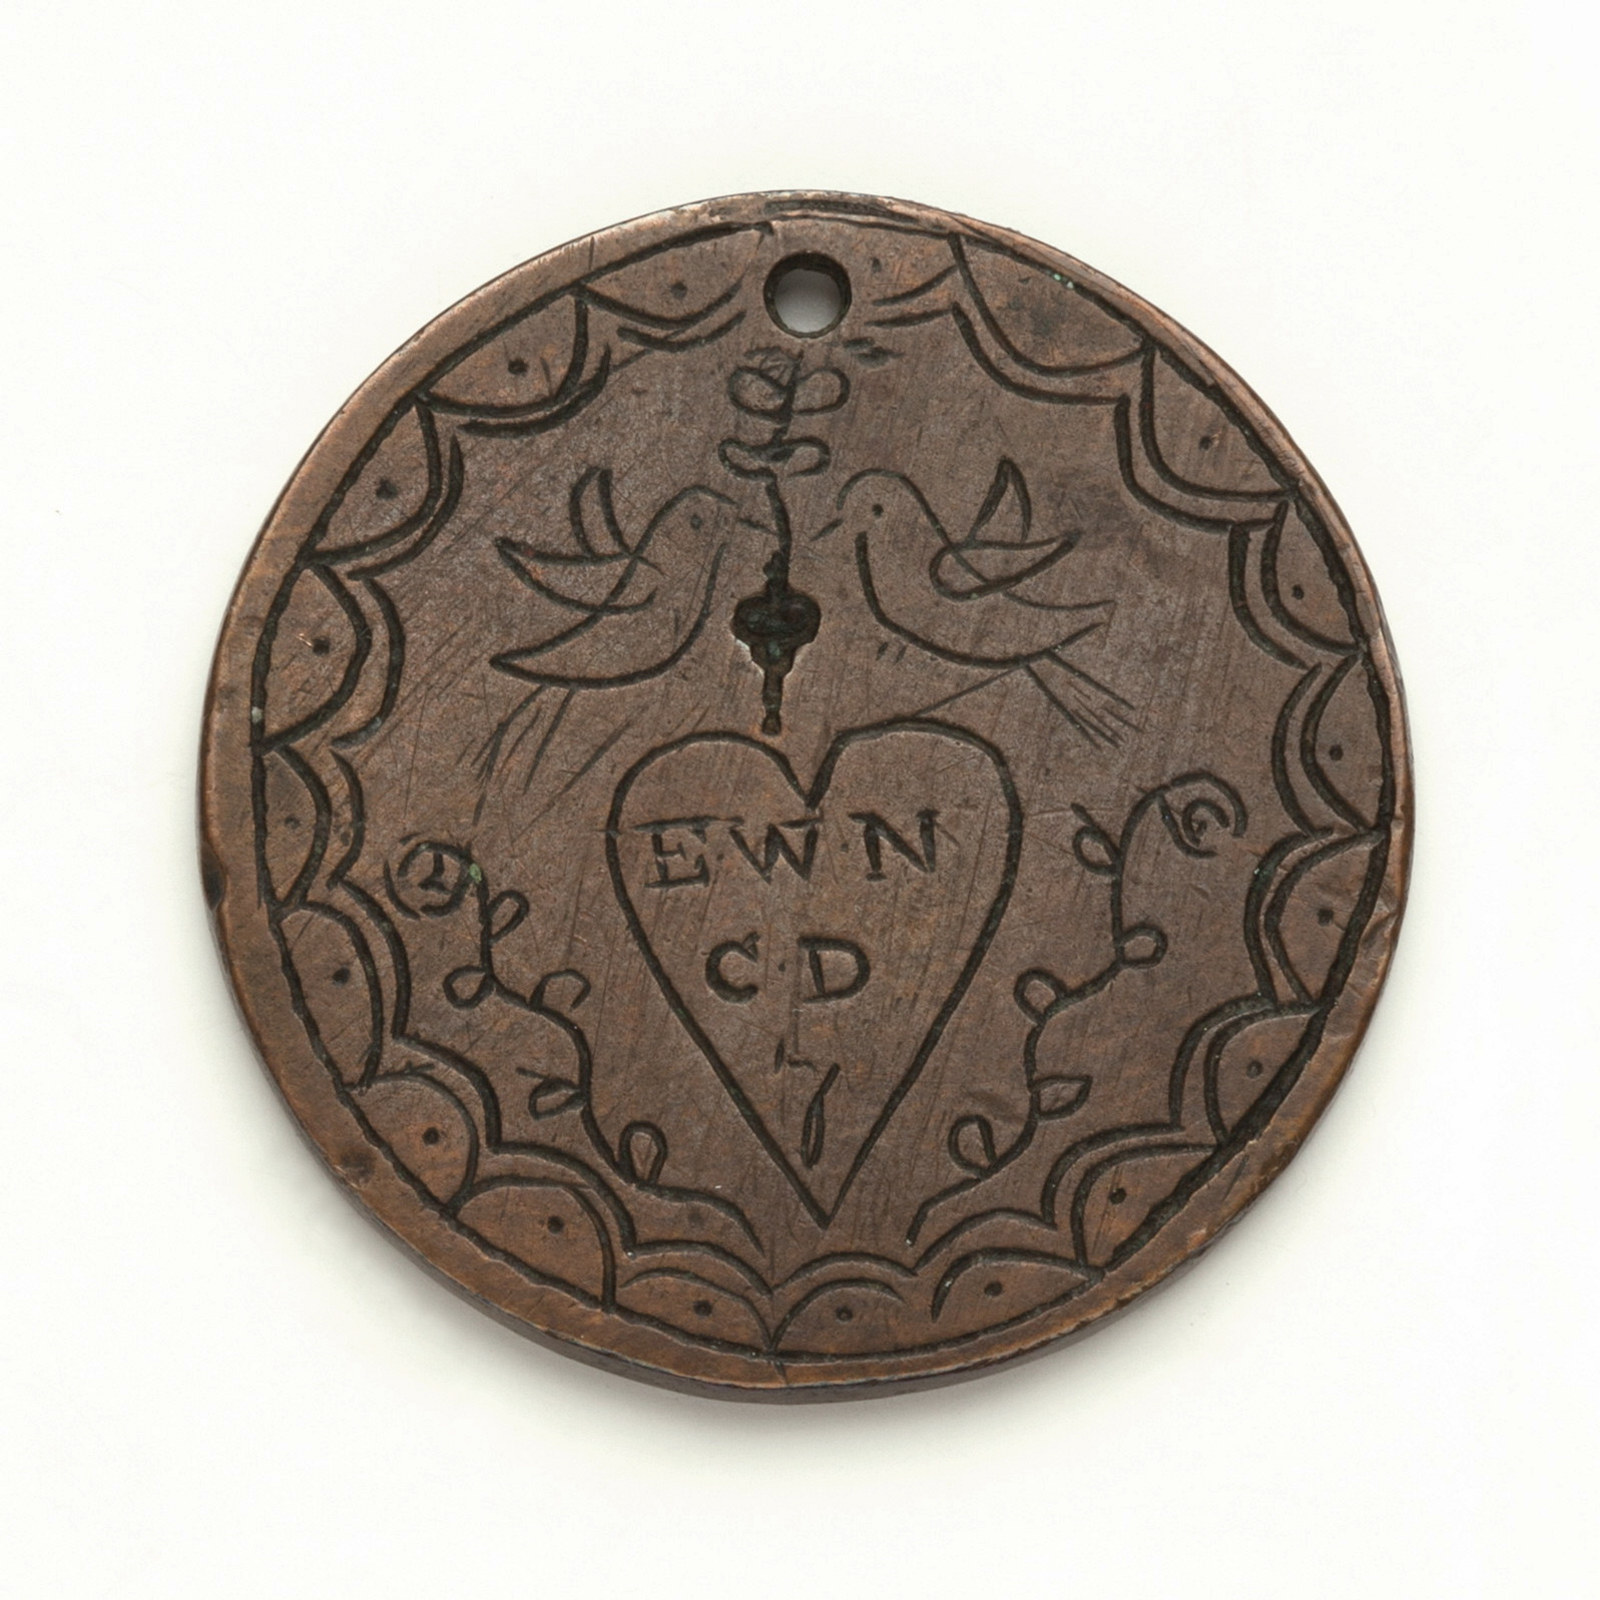 Convict love token, inscribed in 1825